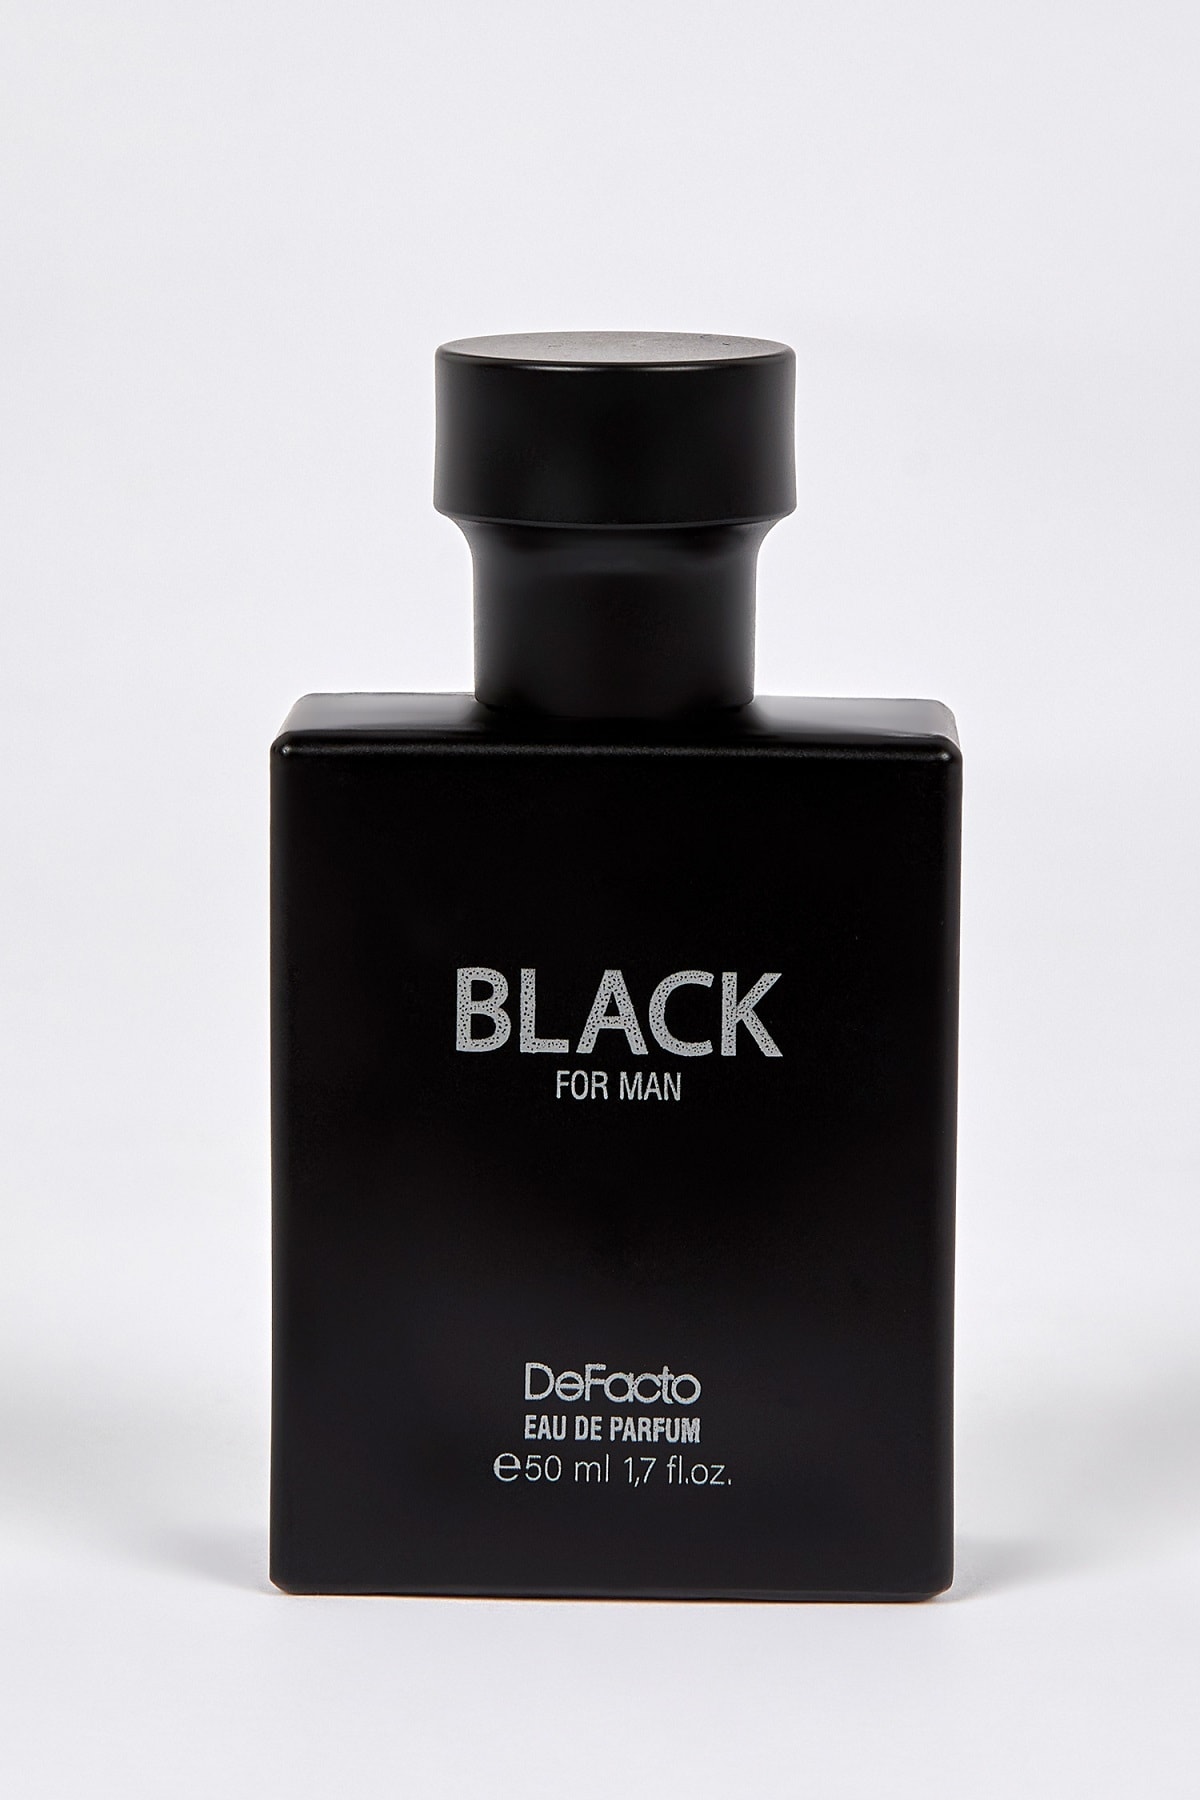 عطر مردانه بلک برند دیفکتو Defacto Black